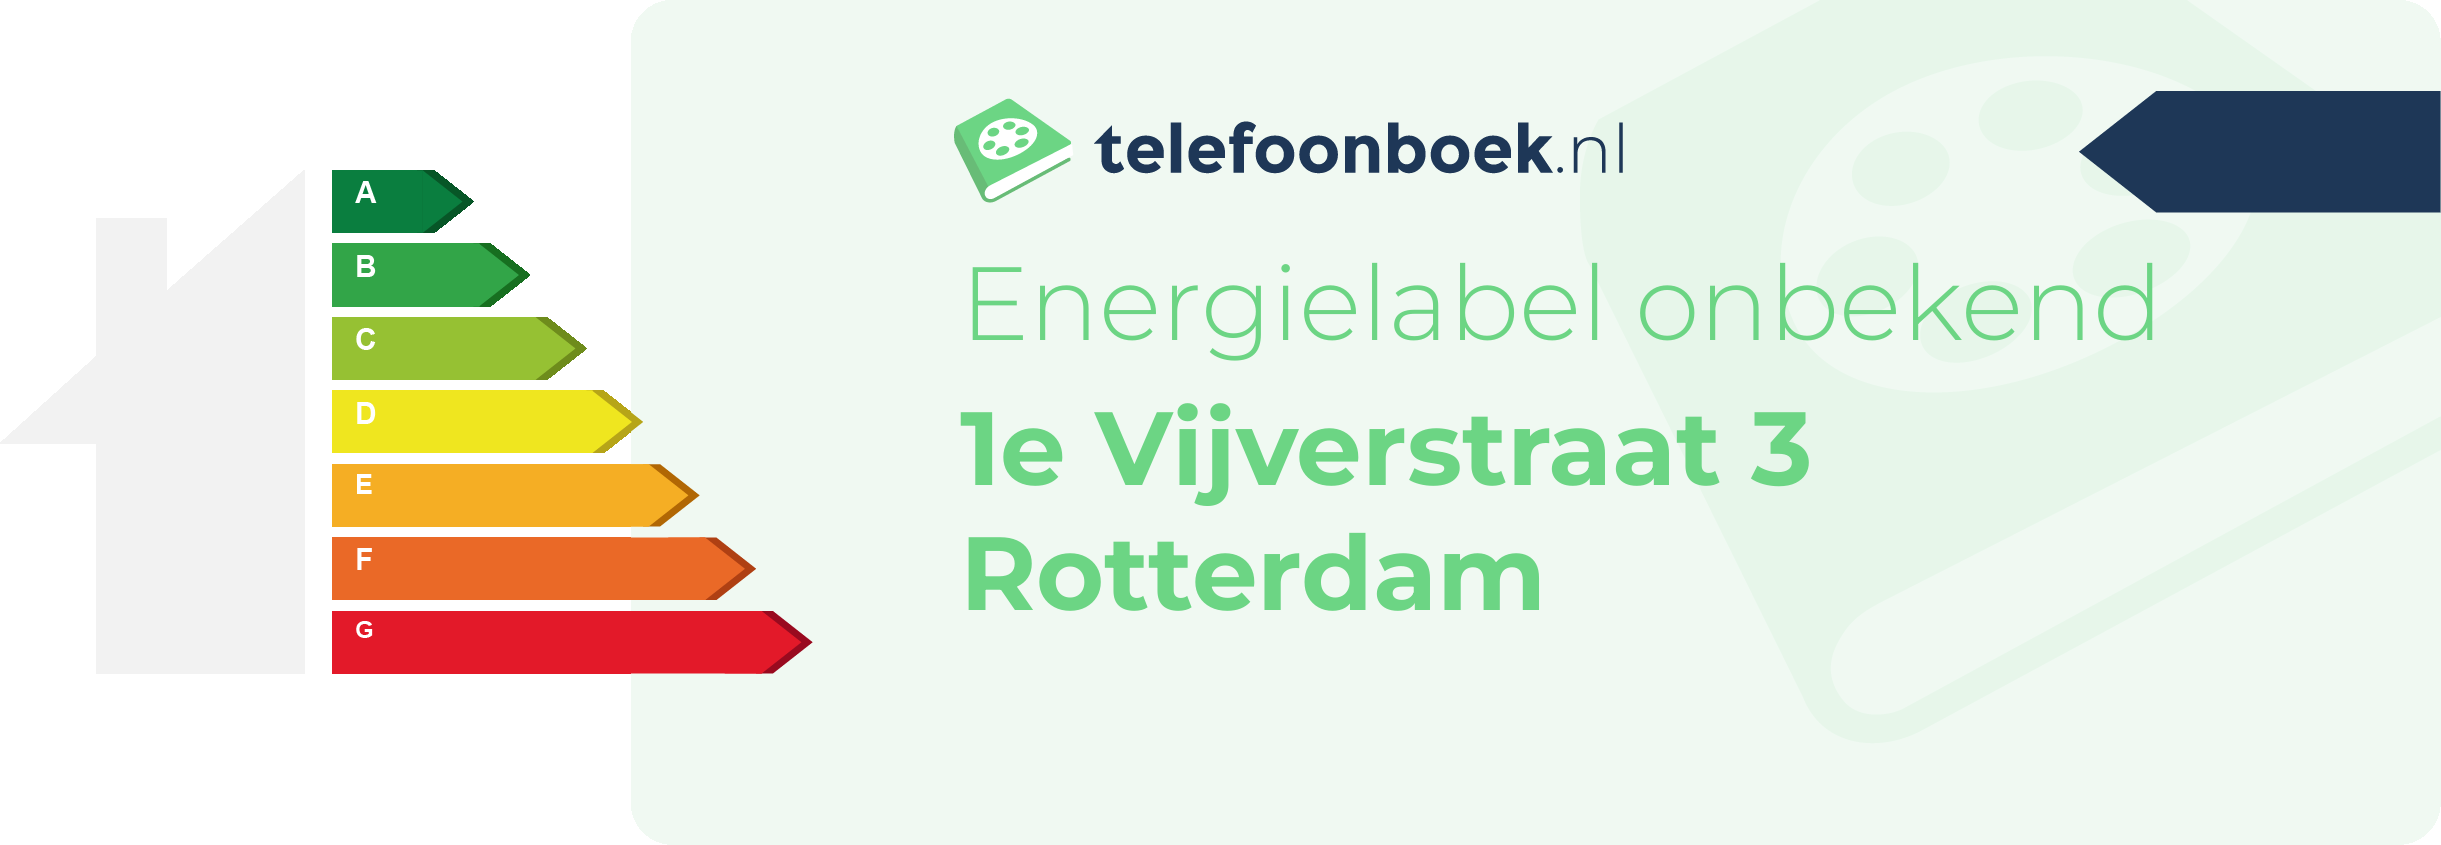 Energielabel 1e Vijverstraat 3 Rotterdam